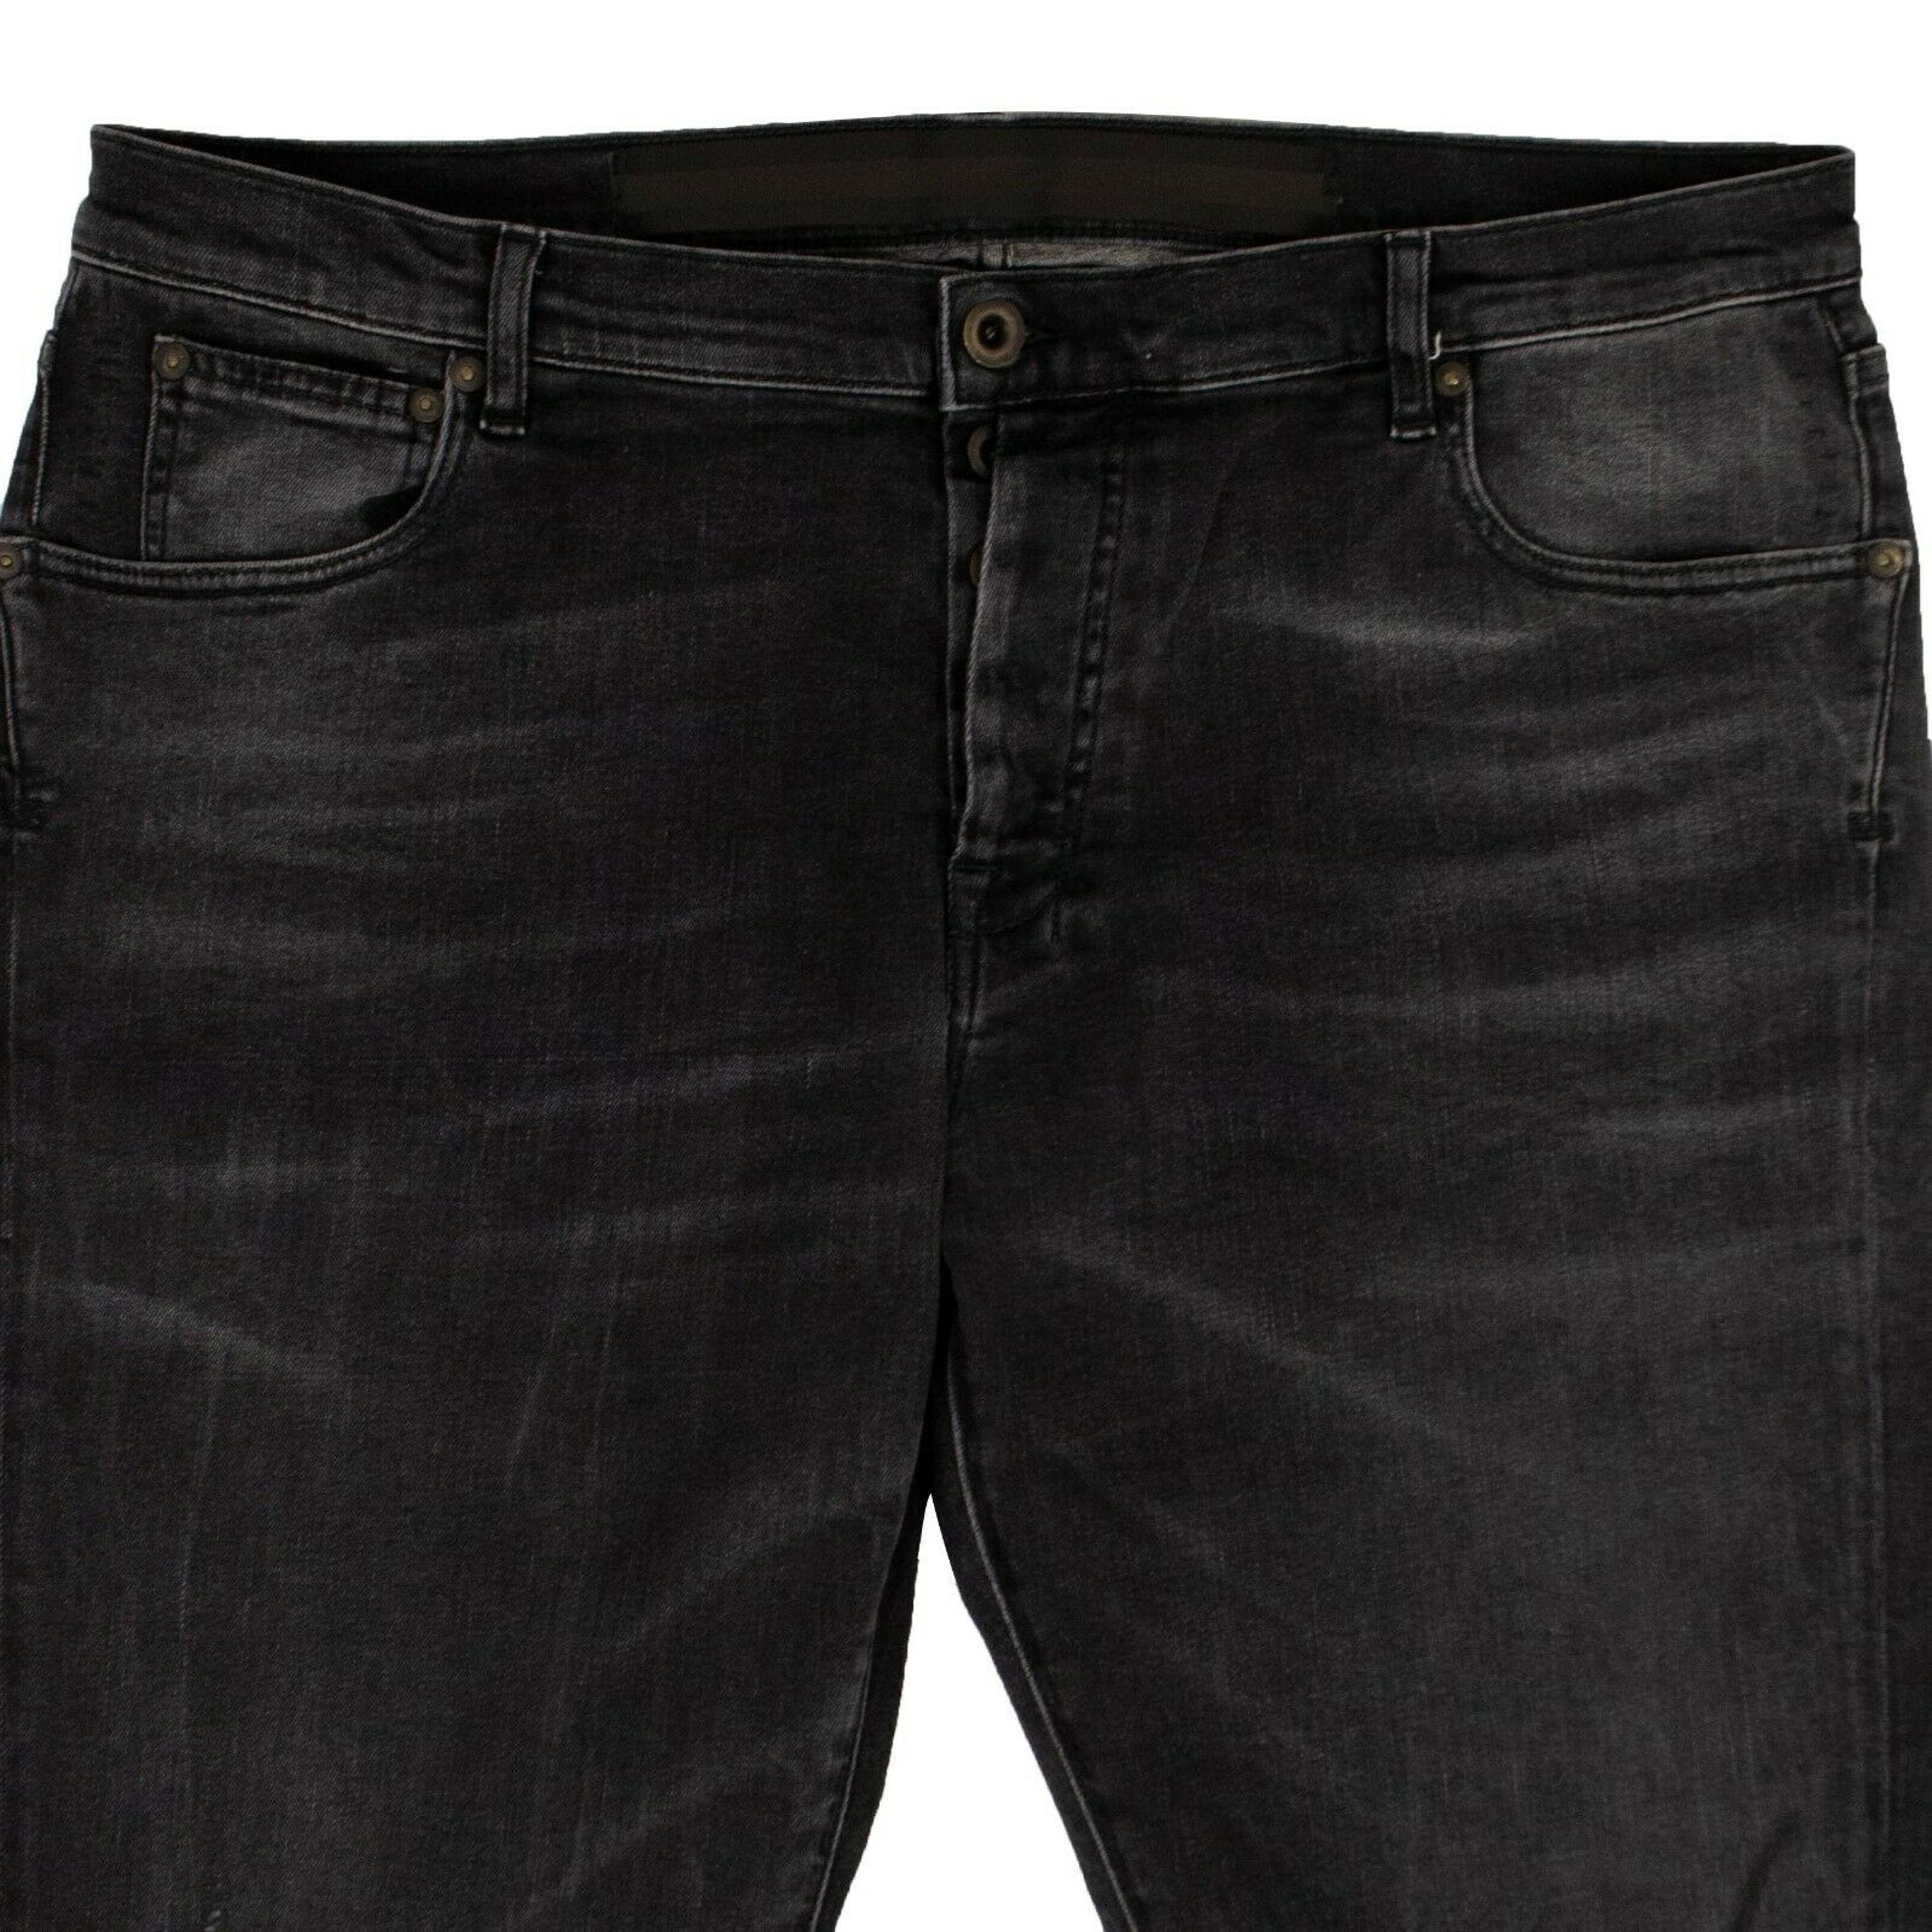 Alternate View 2 of Men's Black Distressed Slim Fit Jeans